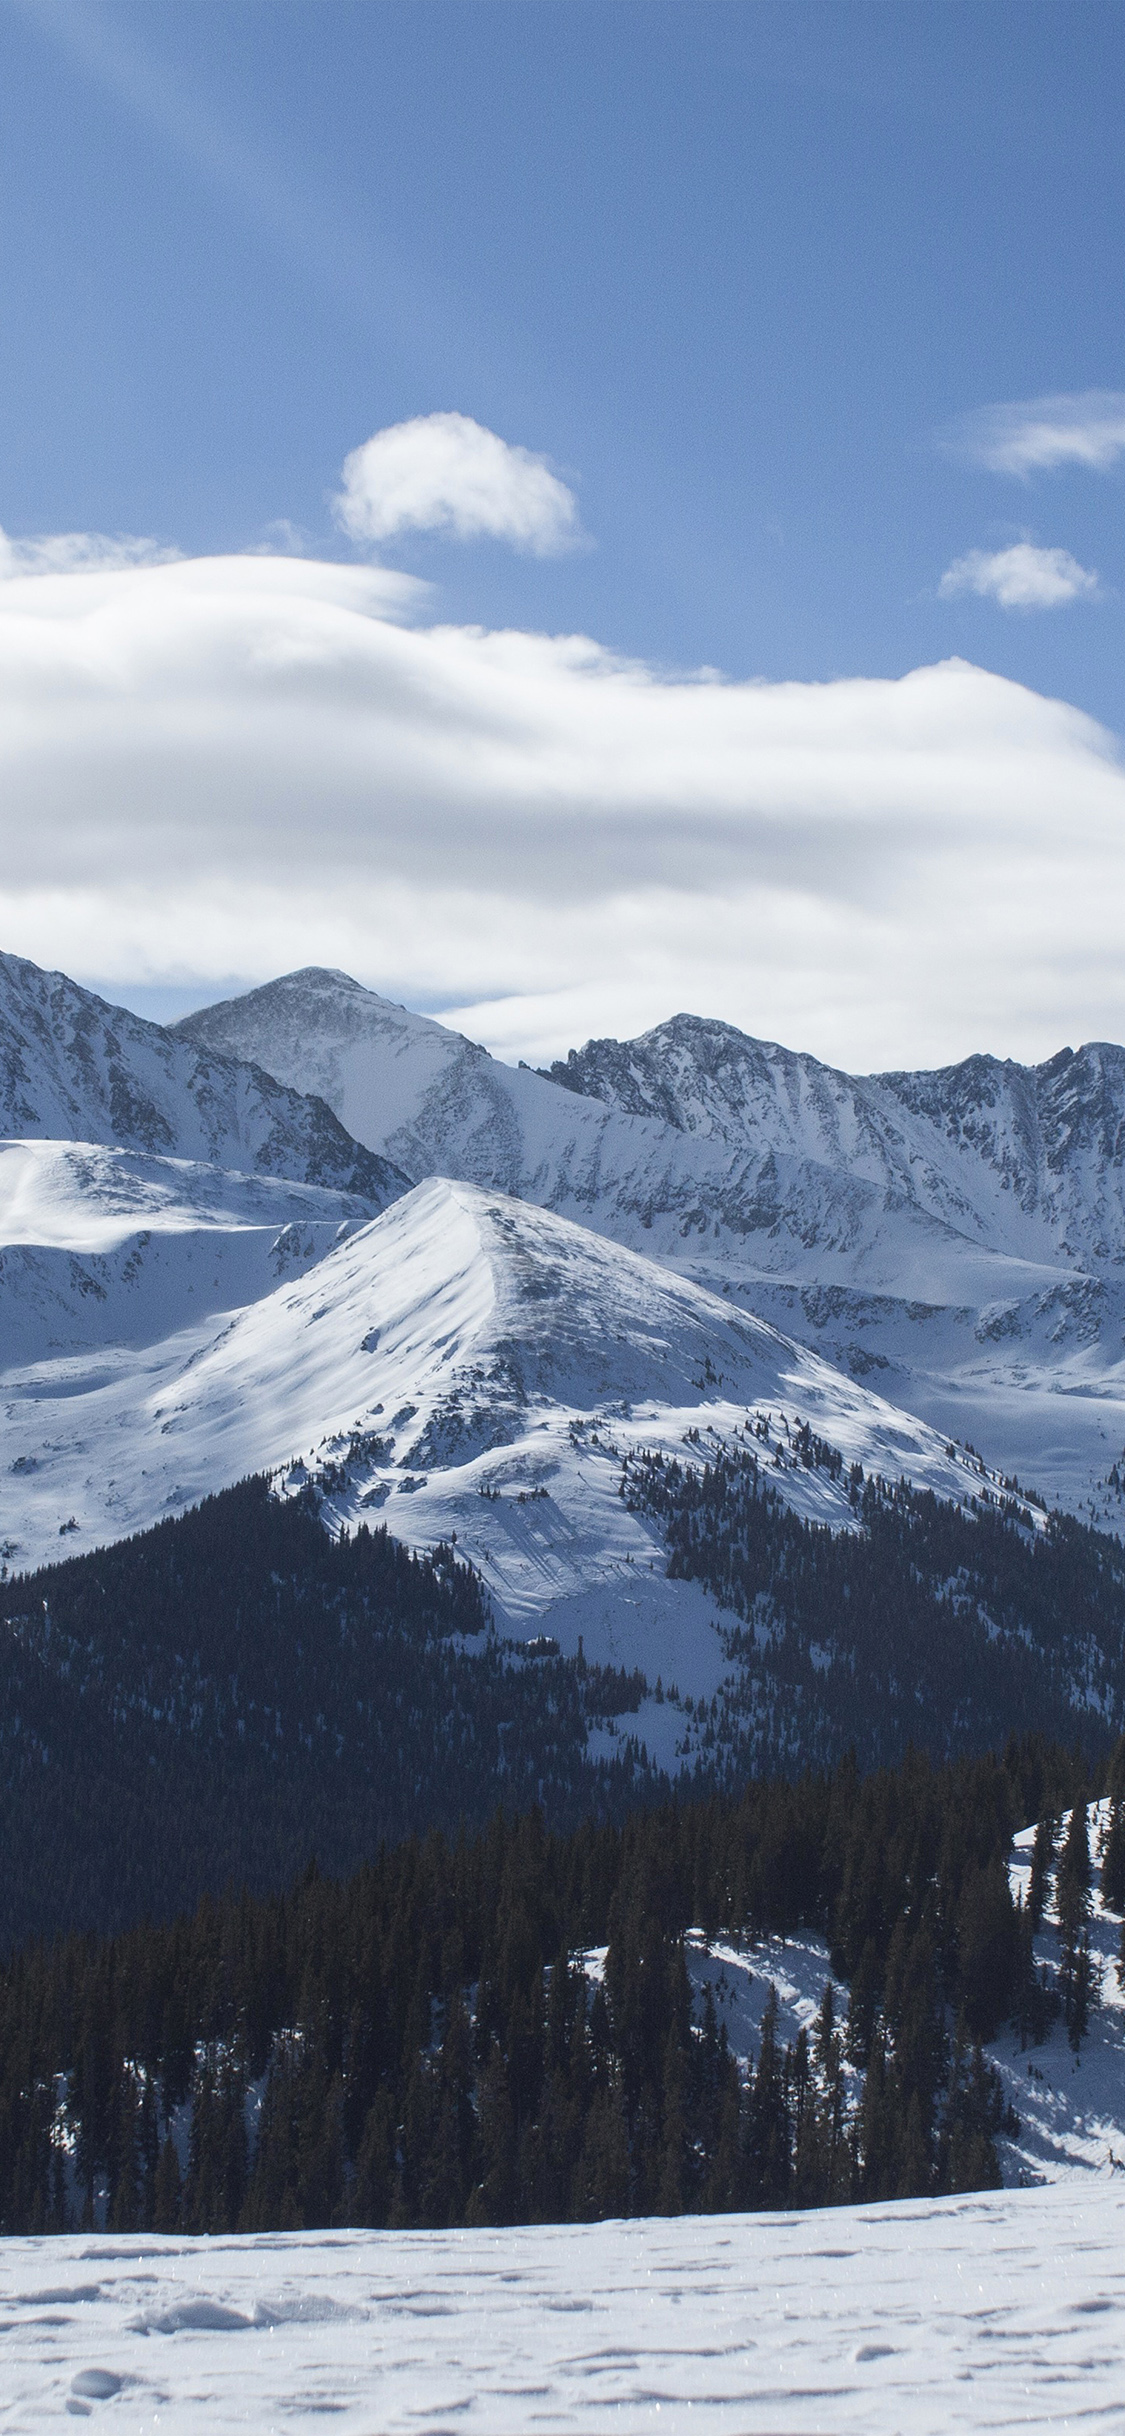 iPhone X wallpaper. snow mountain winter sky blue nature